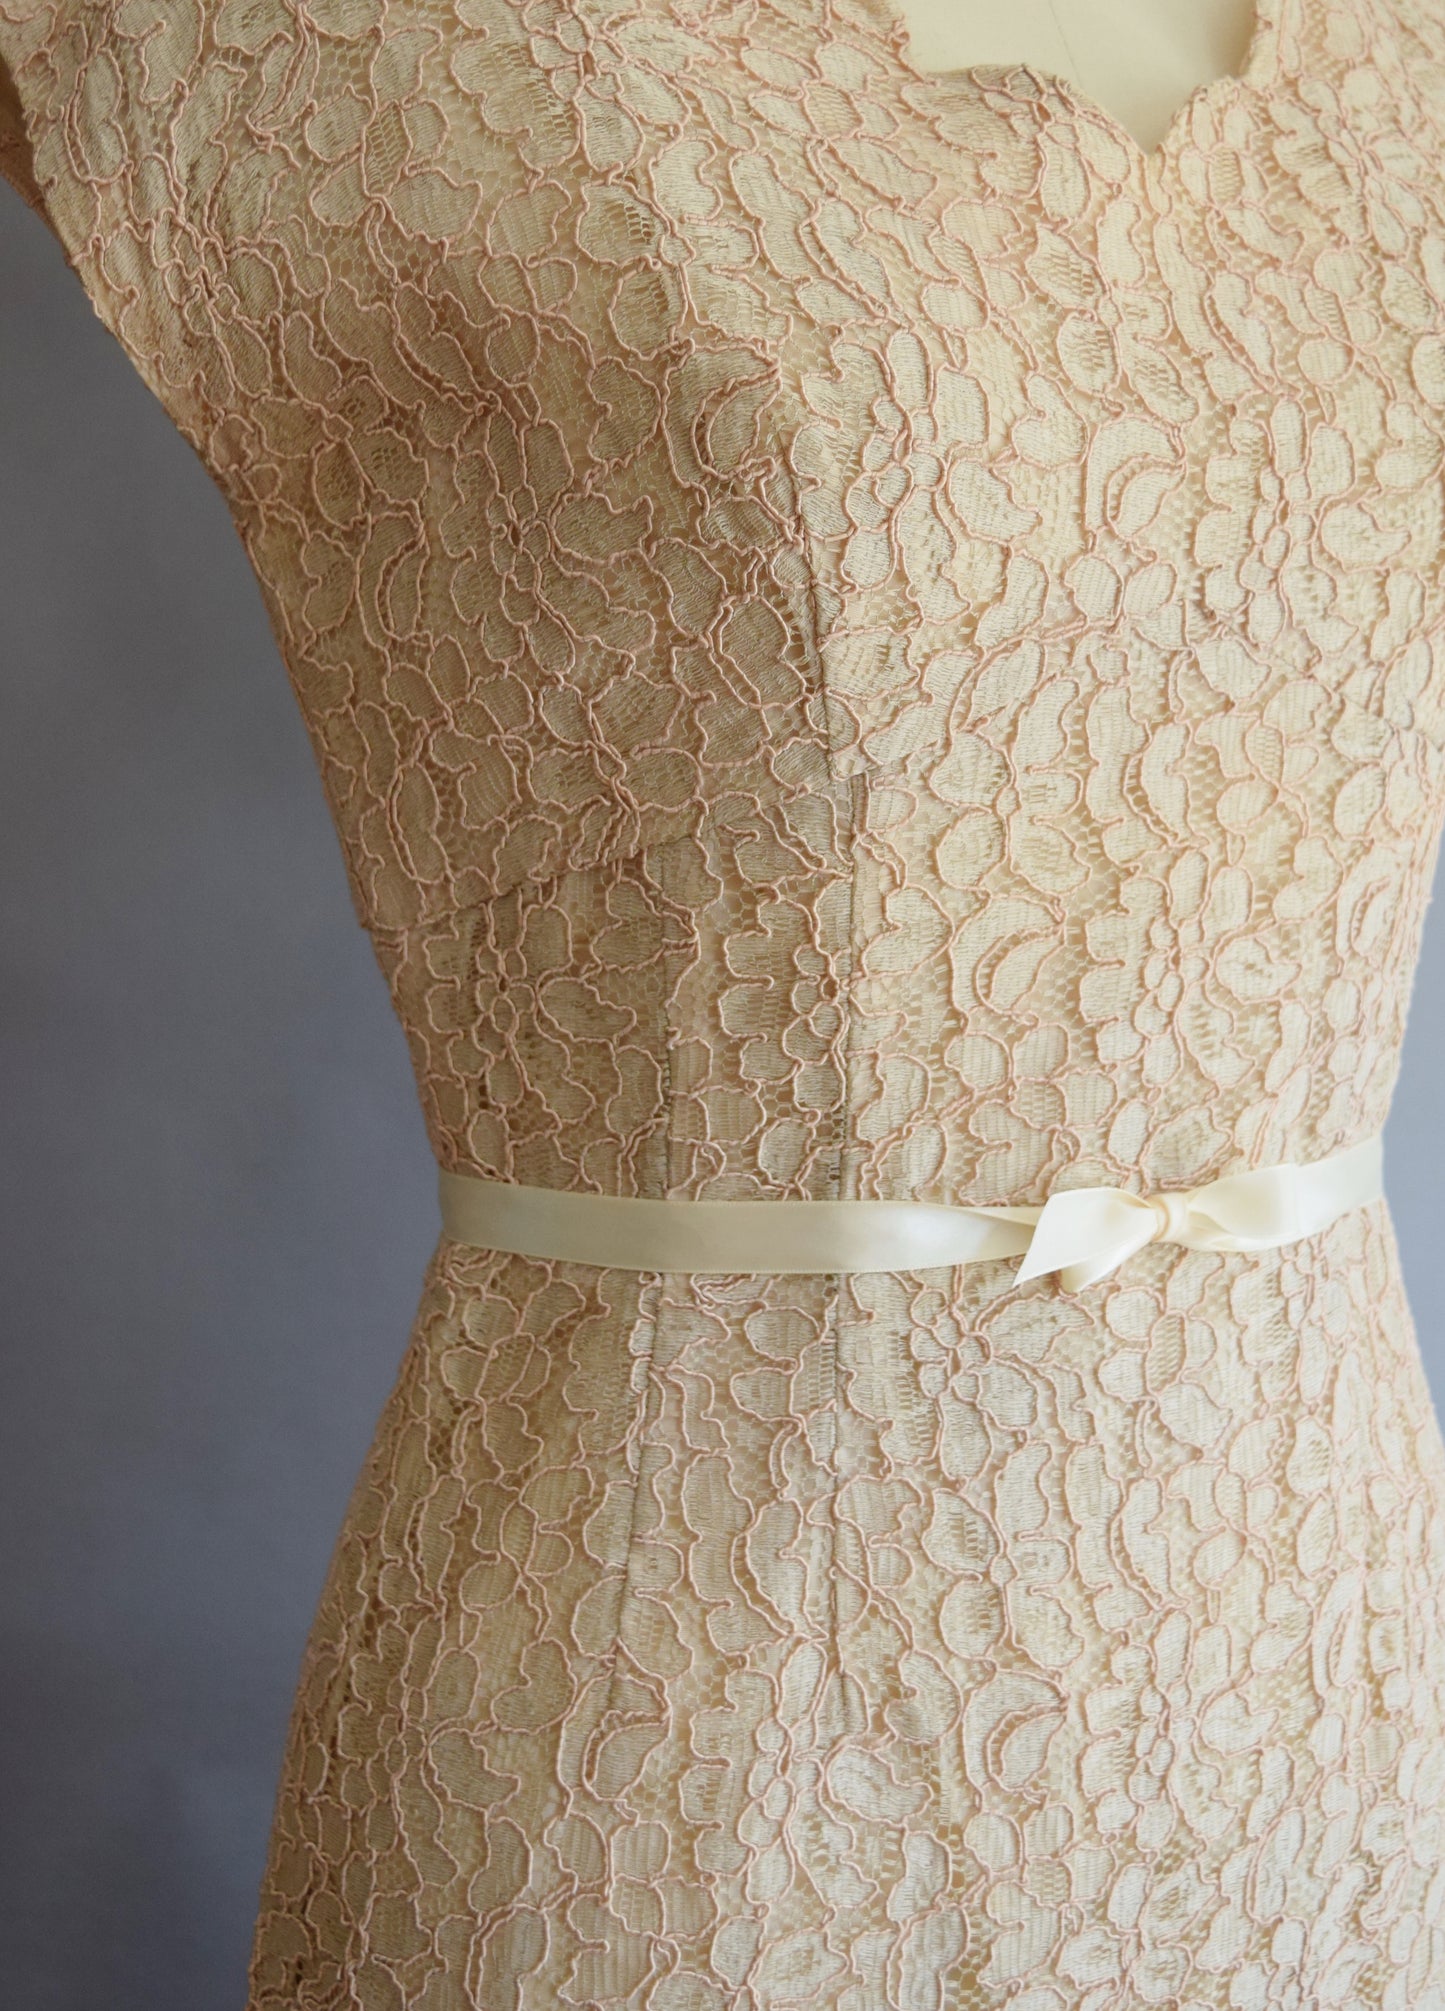 1950s Alencon Lace Sheath Dress